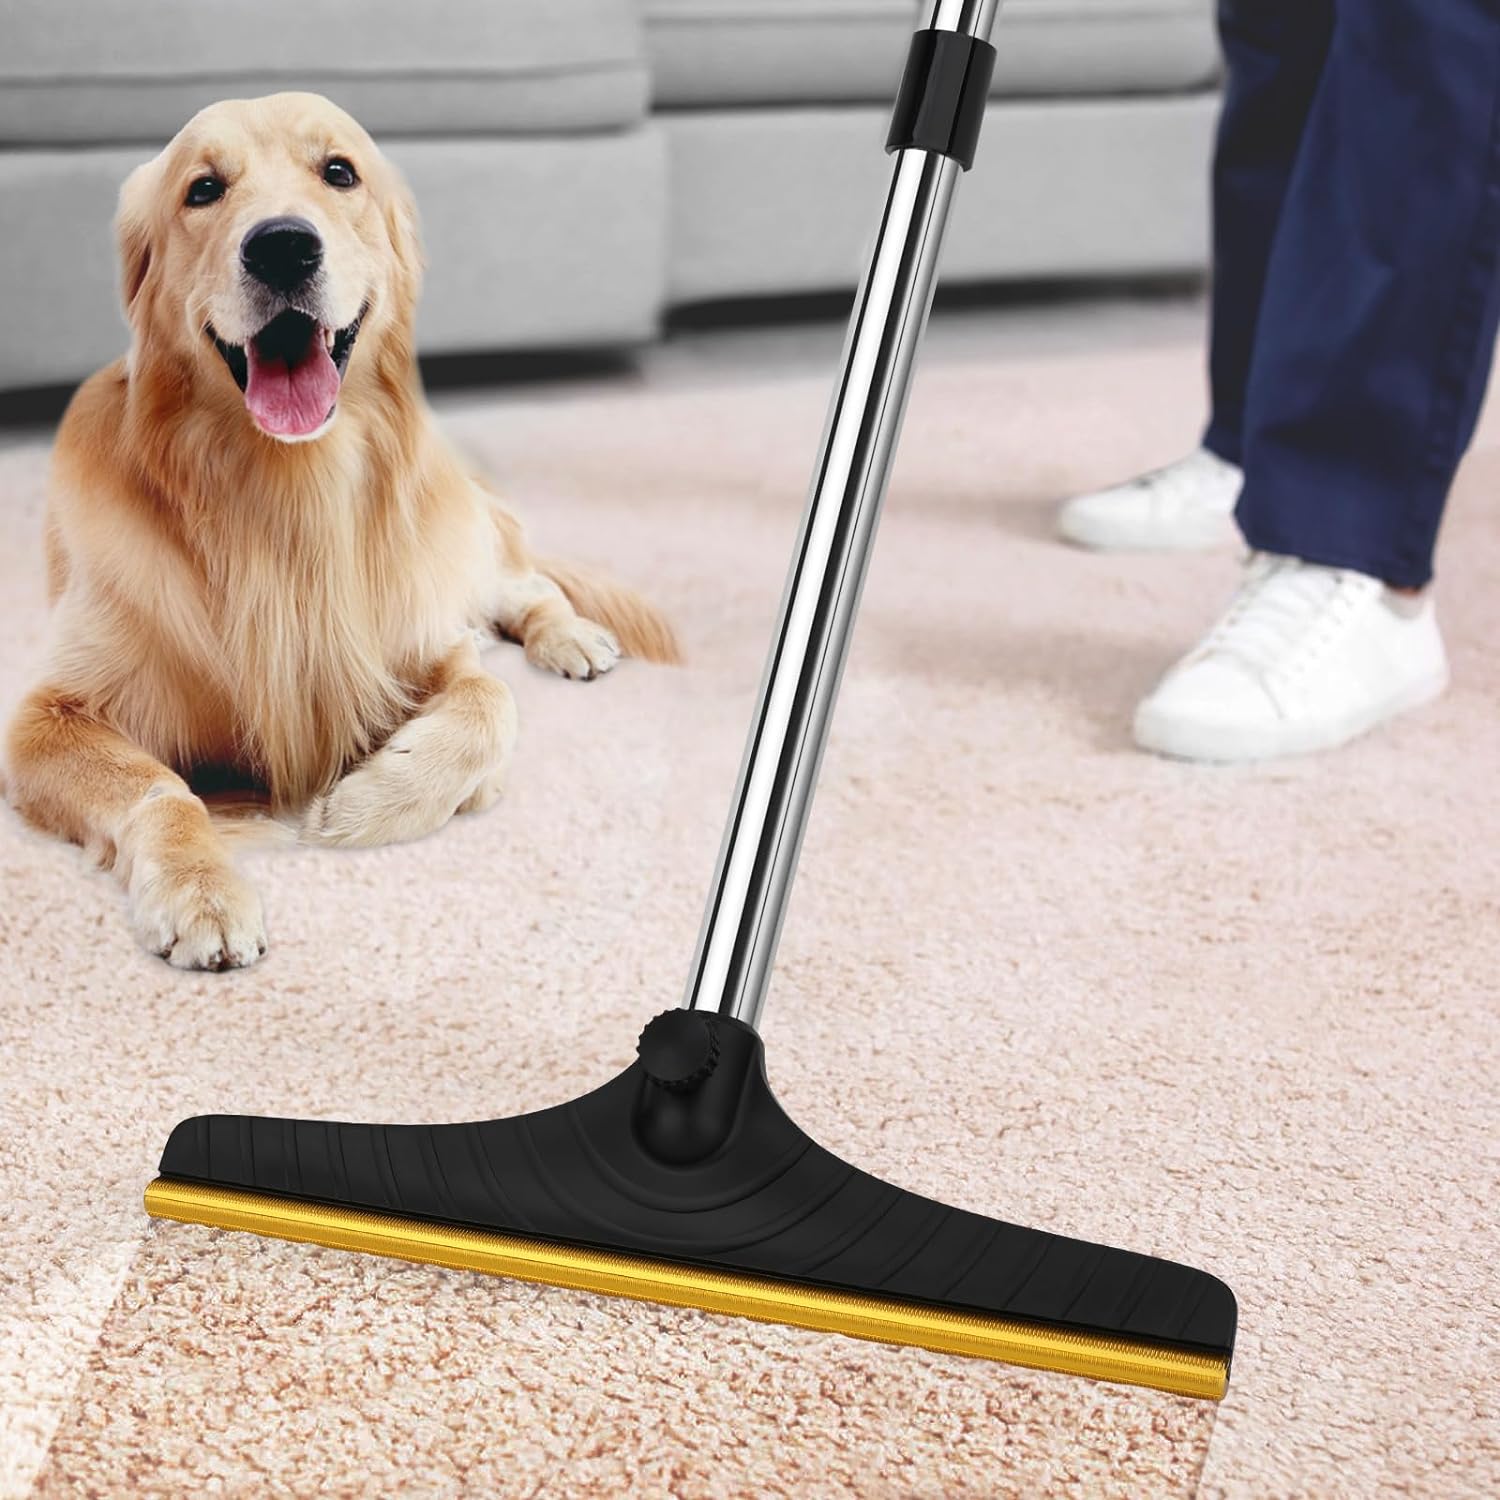 B-Land Carpet Rake for Pet Hair Removal - Reusable Tool with 60” Adjustable Handle, Carpet Brush & Scraper